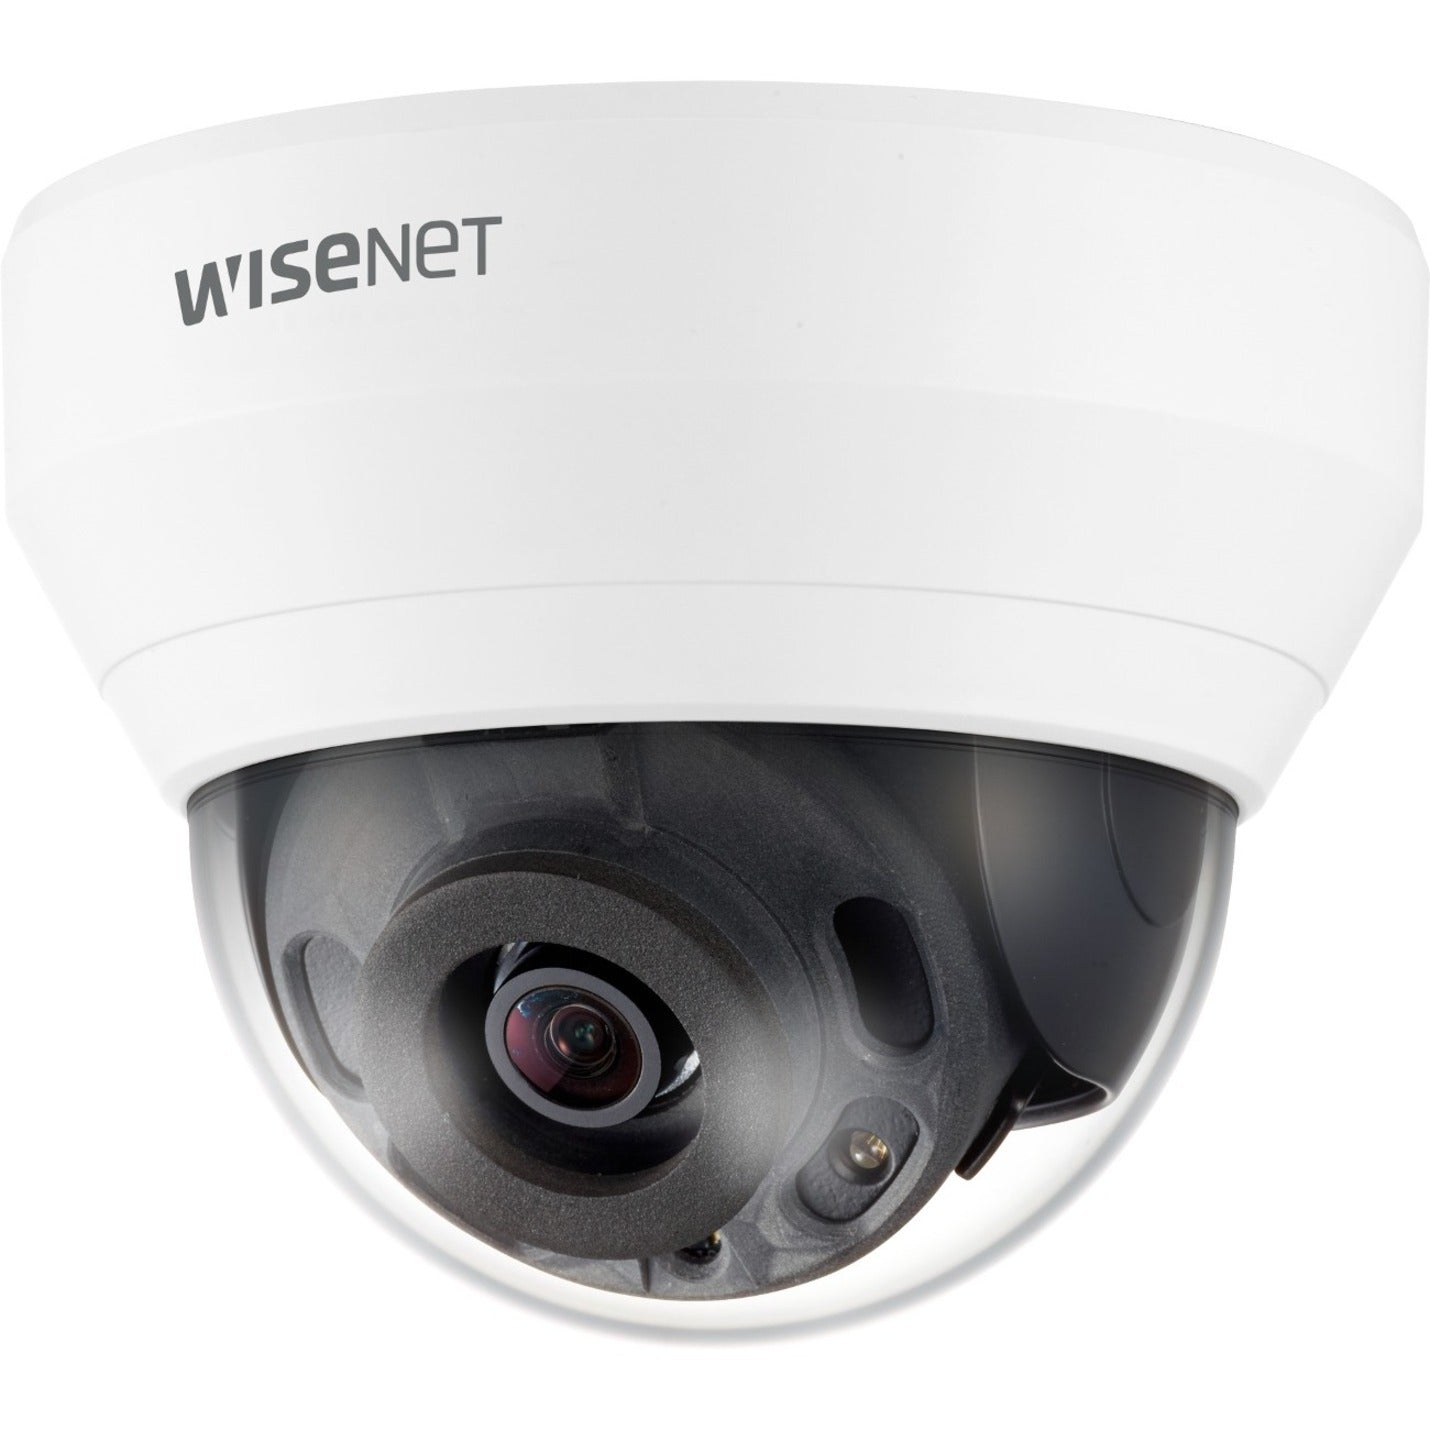 Wisenet QNV-7032R 4MP Network IR Vandal Resistant Camera, Color Dome